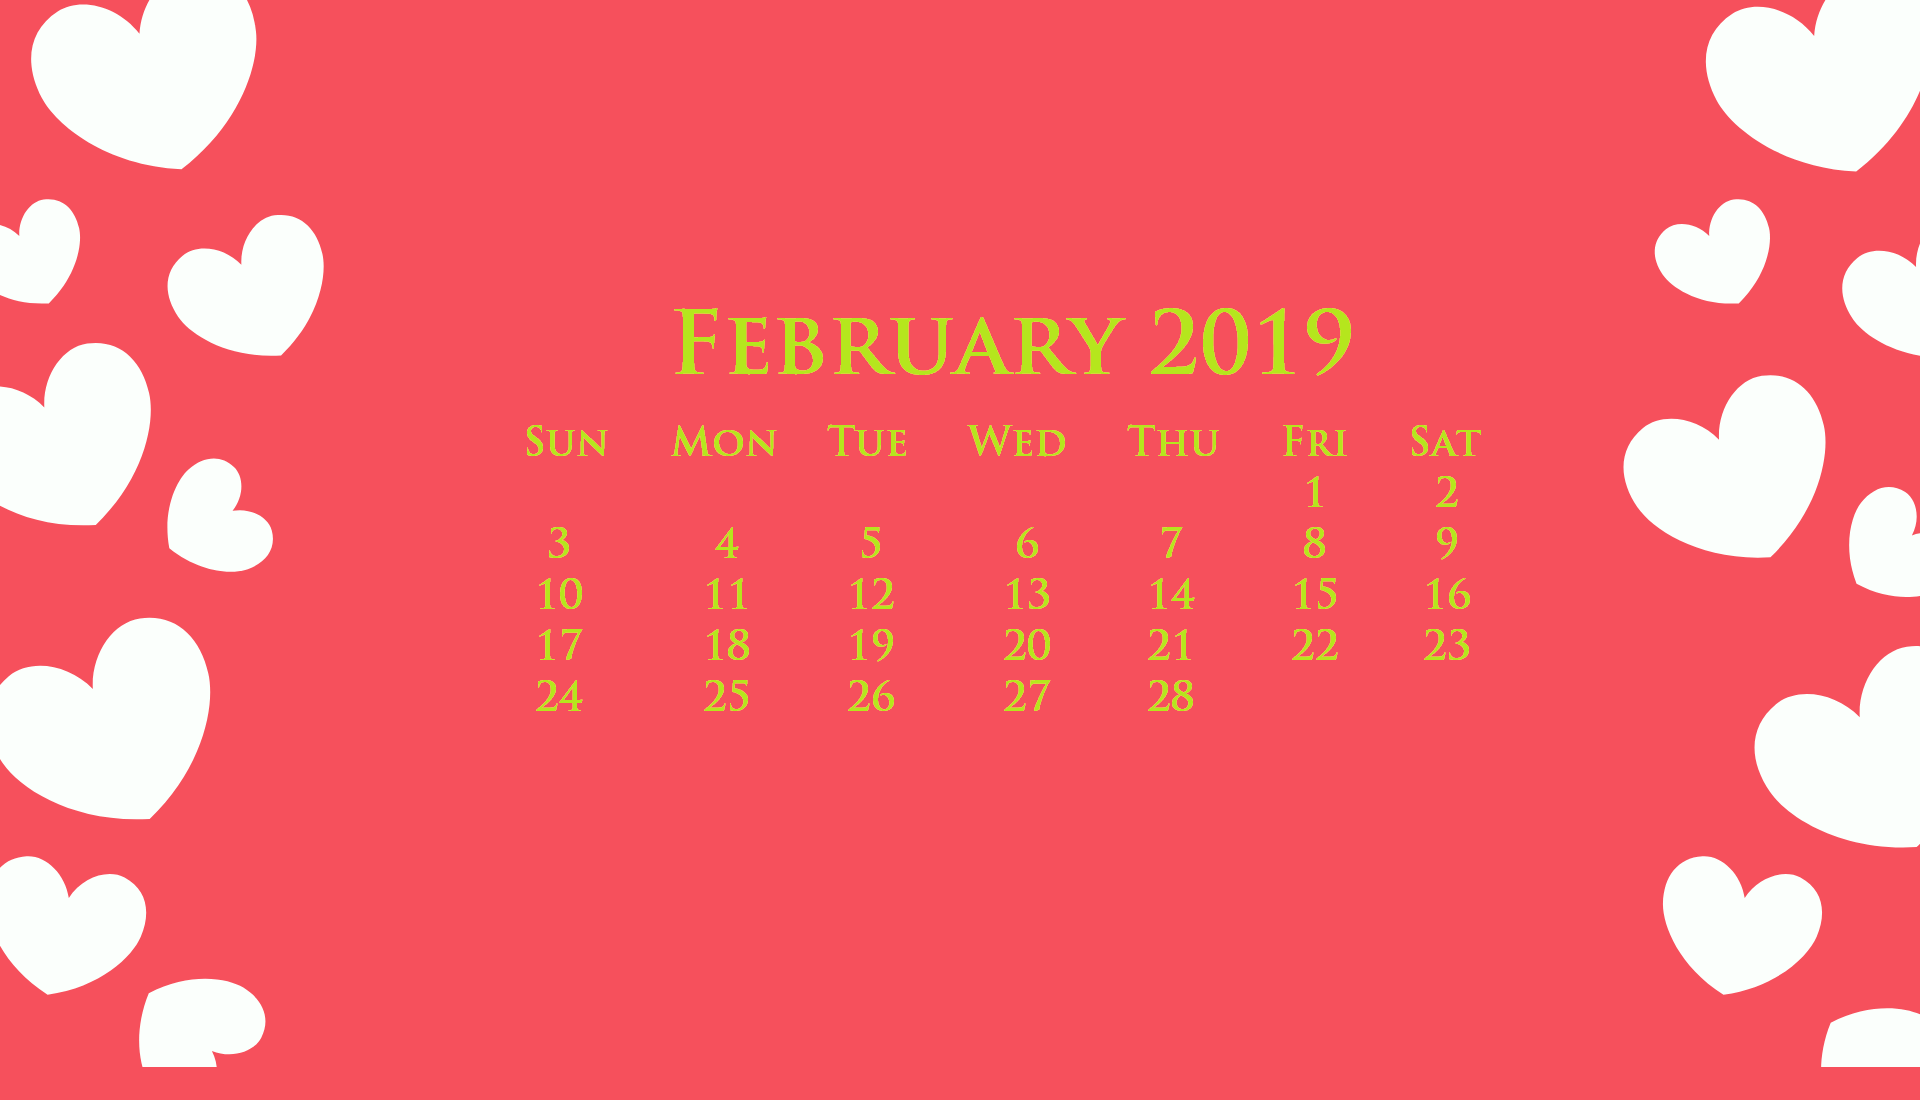 February 2019 Calendar Wallpapers Wallpaper Cave